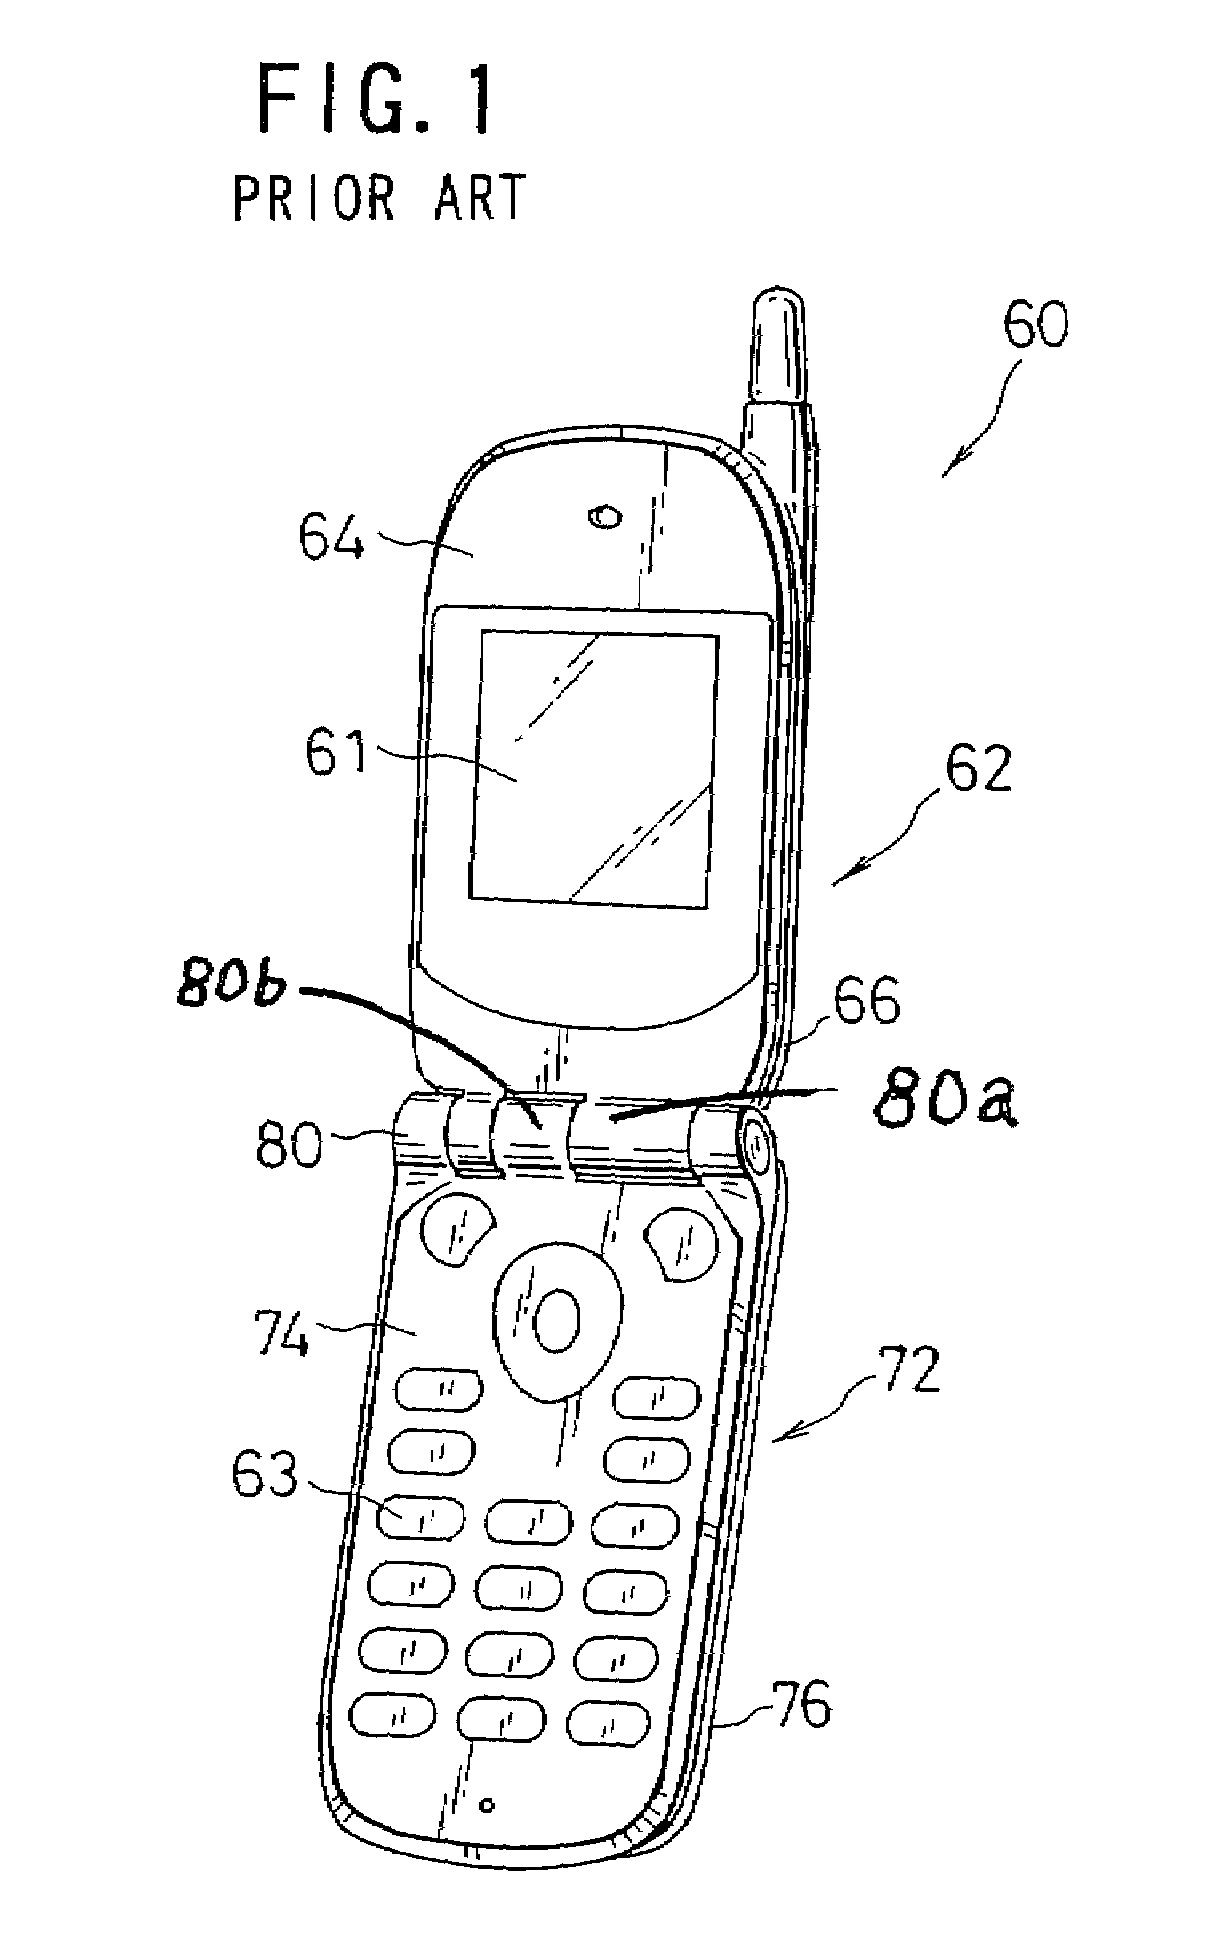 Foldable cellular phone set